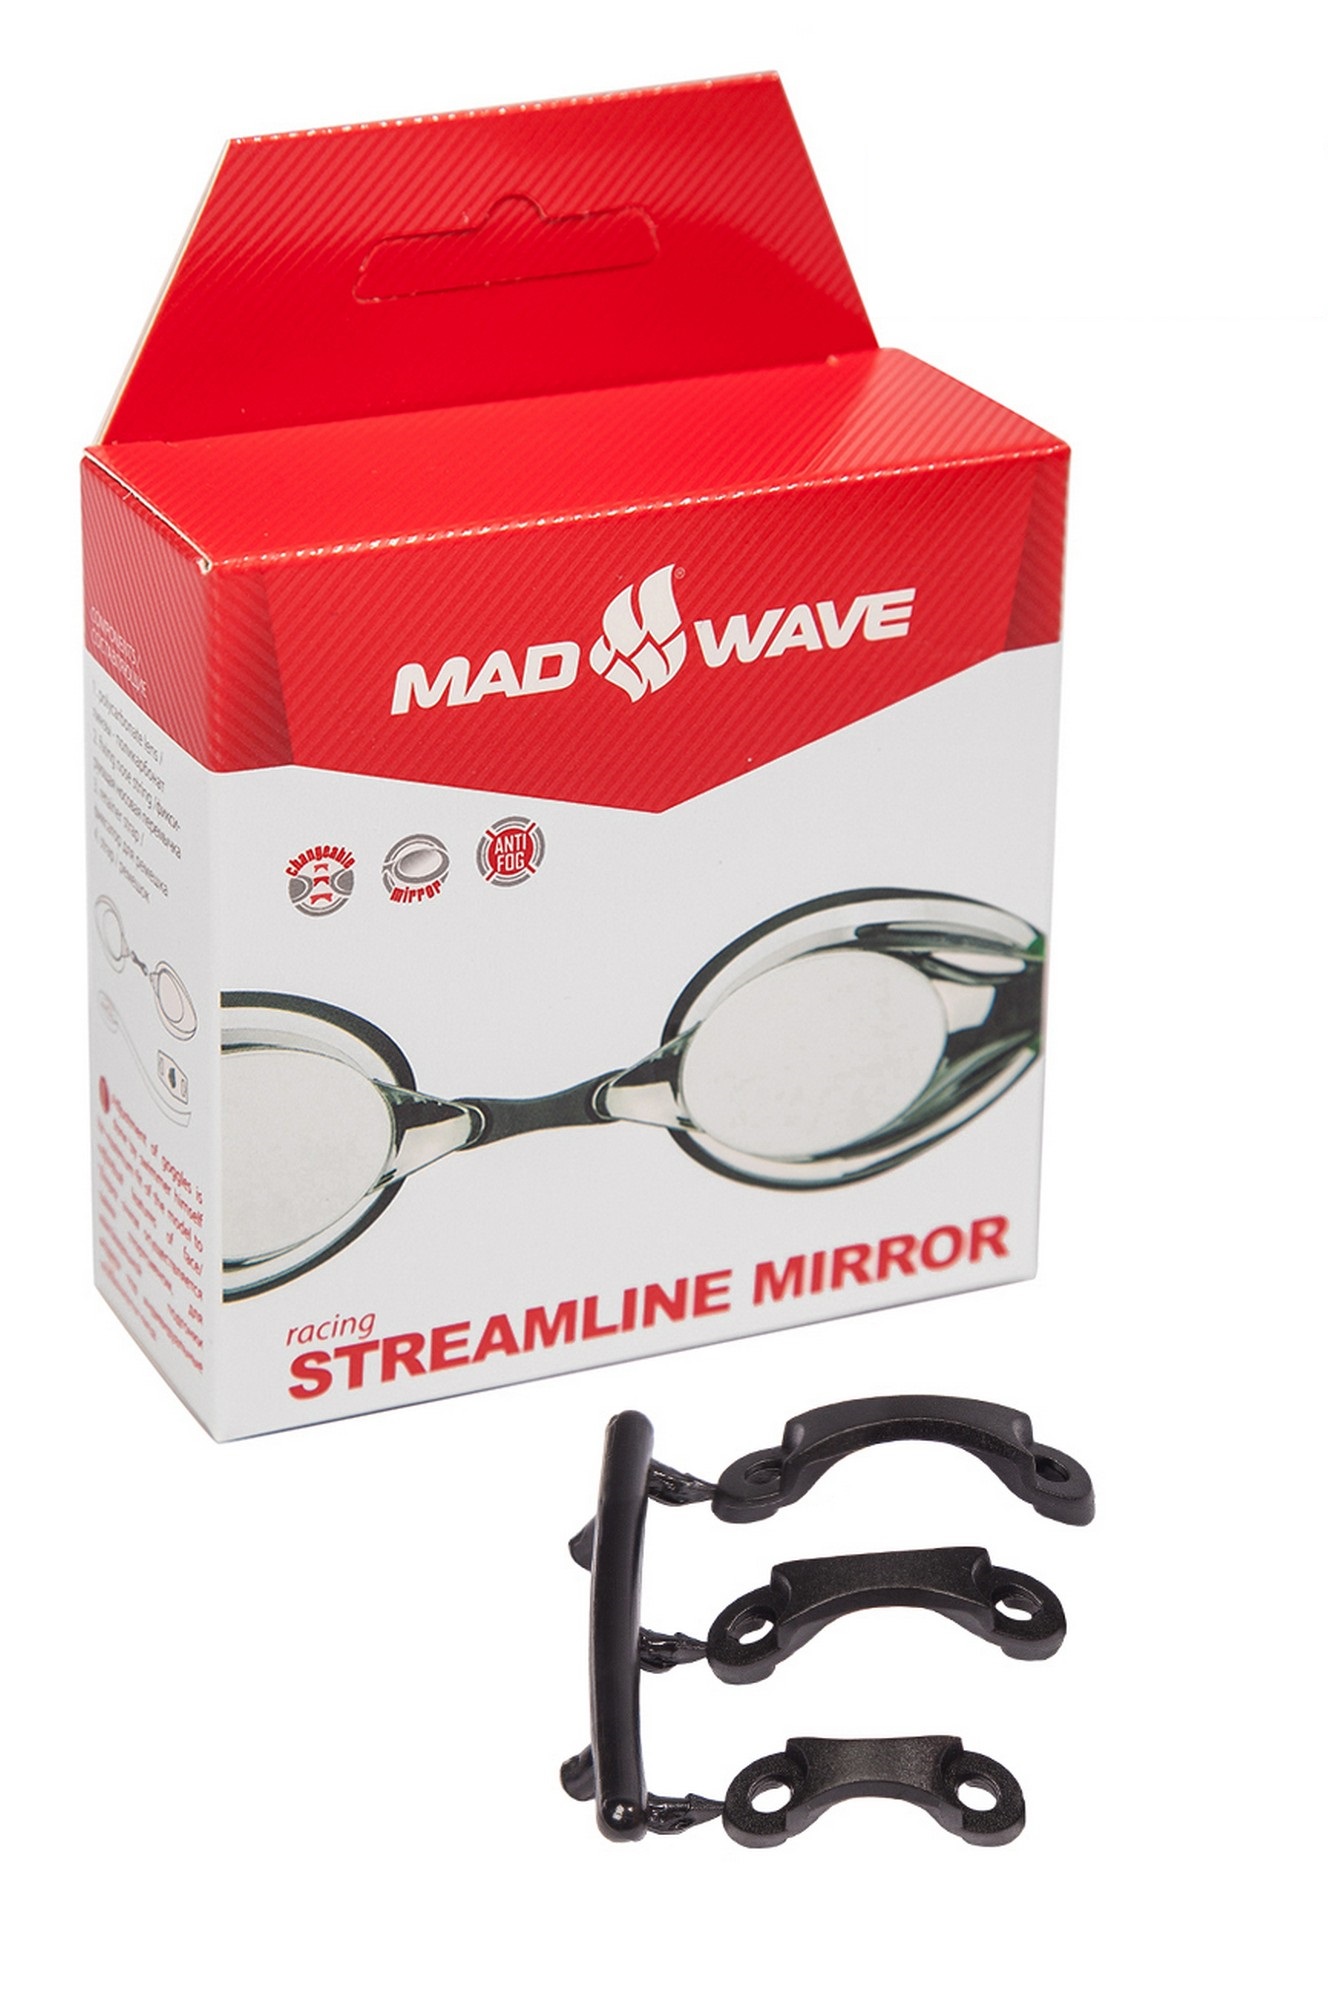 Стартовые очки Mad Wave Streamline Mirror M0457 02 0 10W зеленый 1333_2000